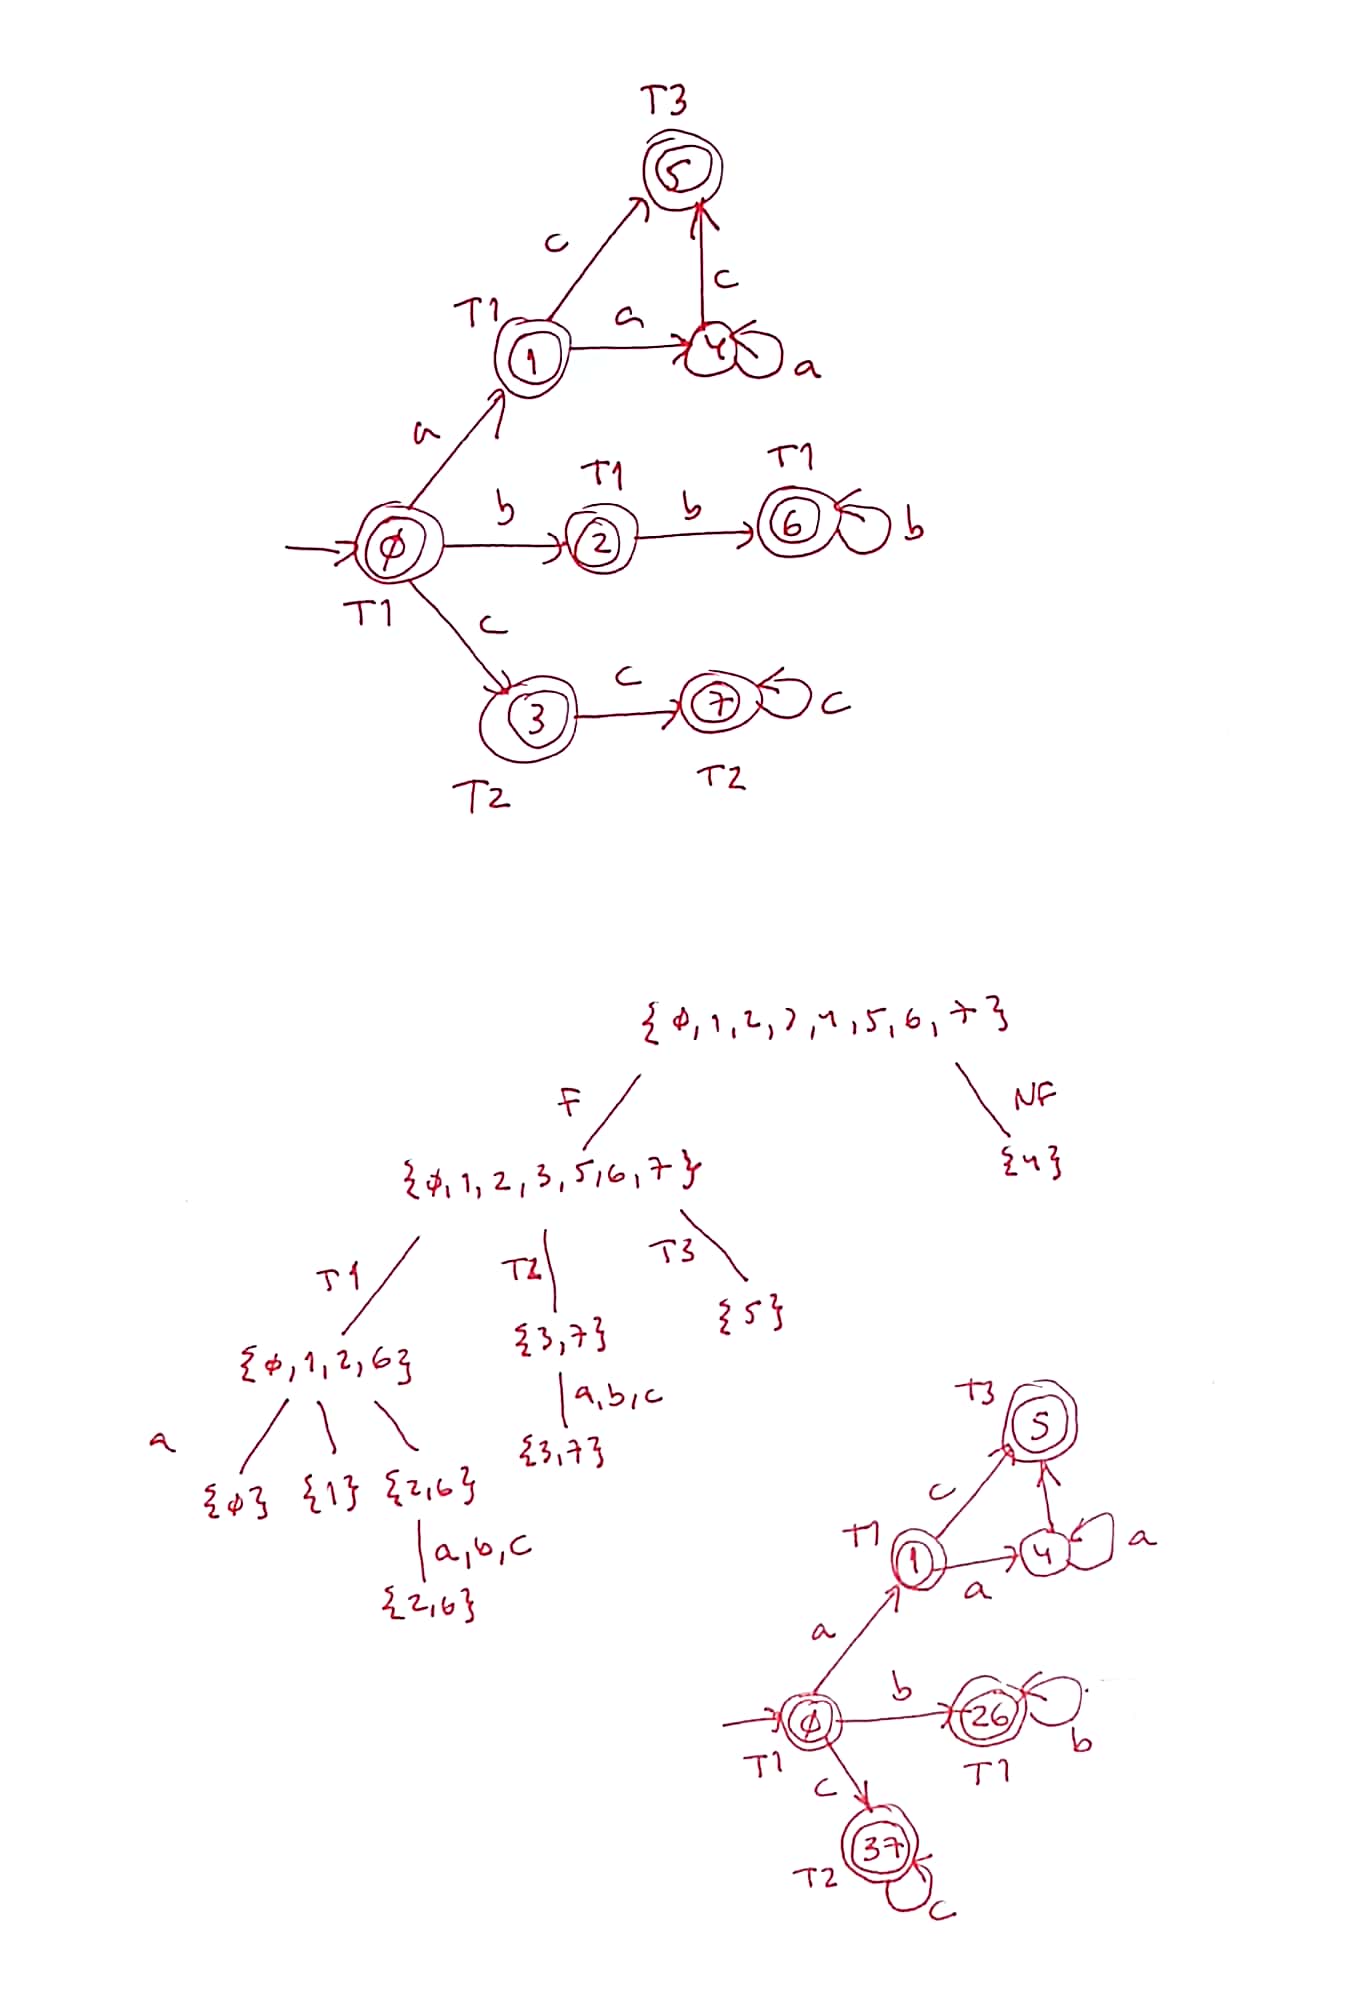 Solution-co-ex23-dfa-graph-min-tree-graph.jpg